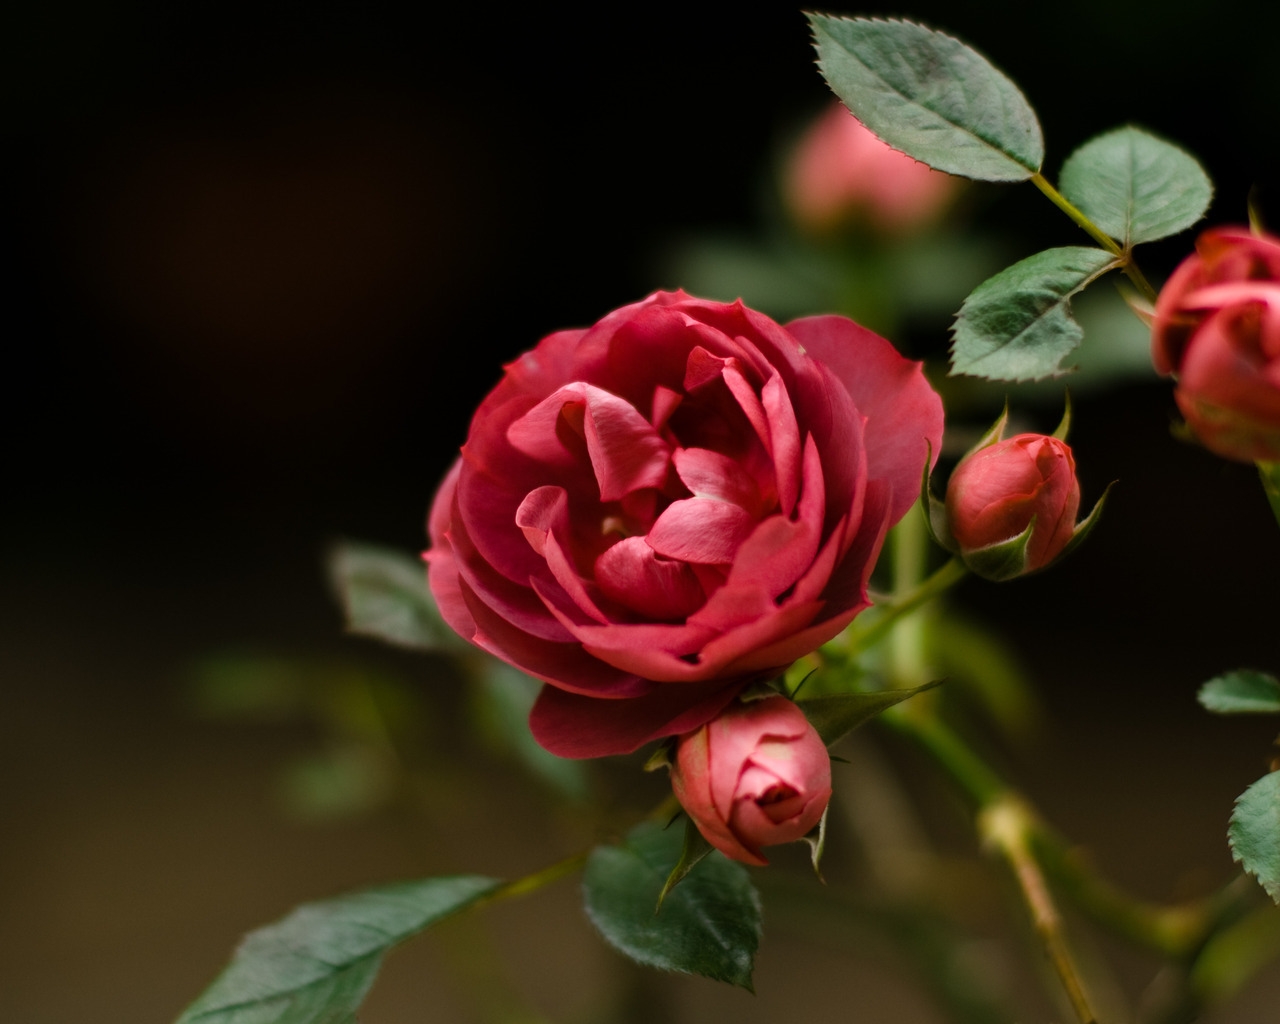 Rose Flower for 1280 x 1024 resolution